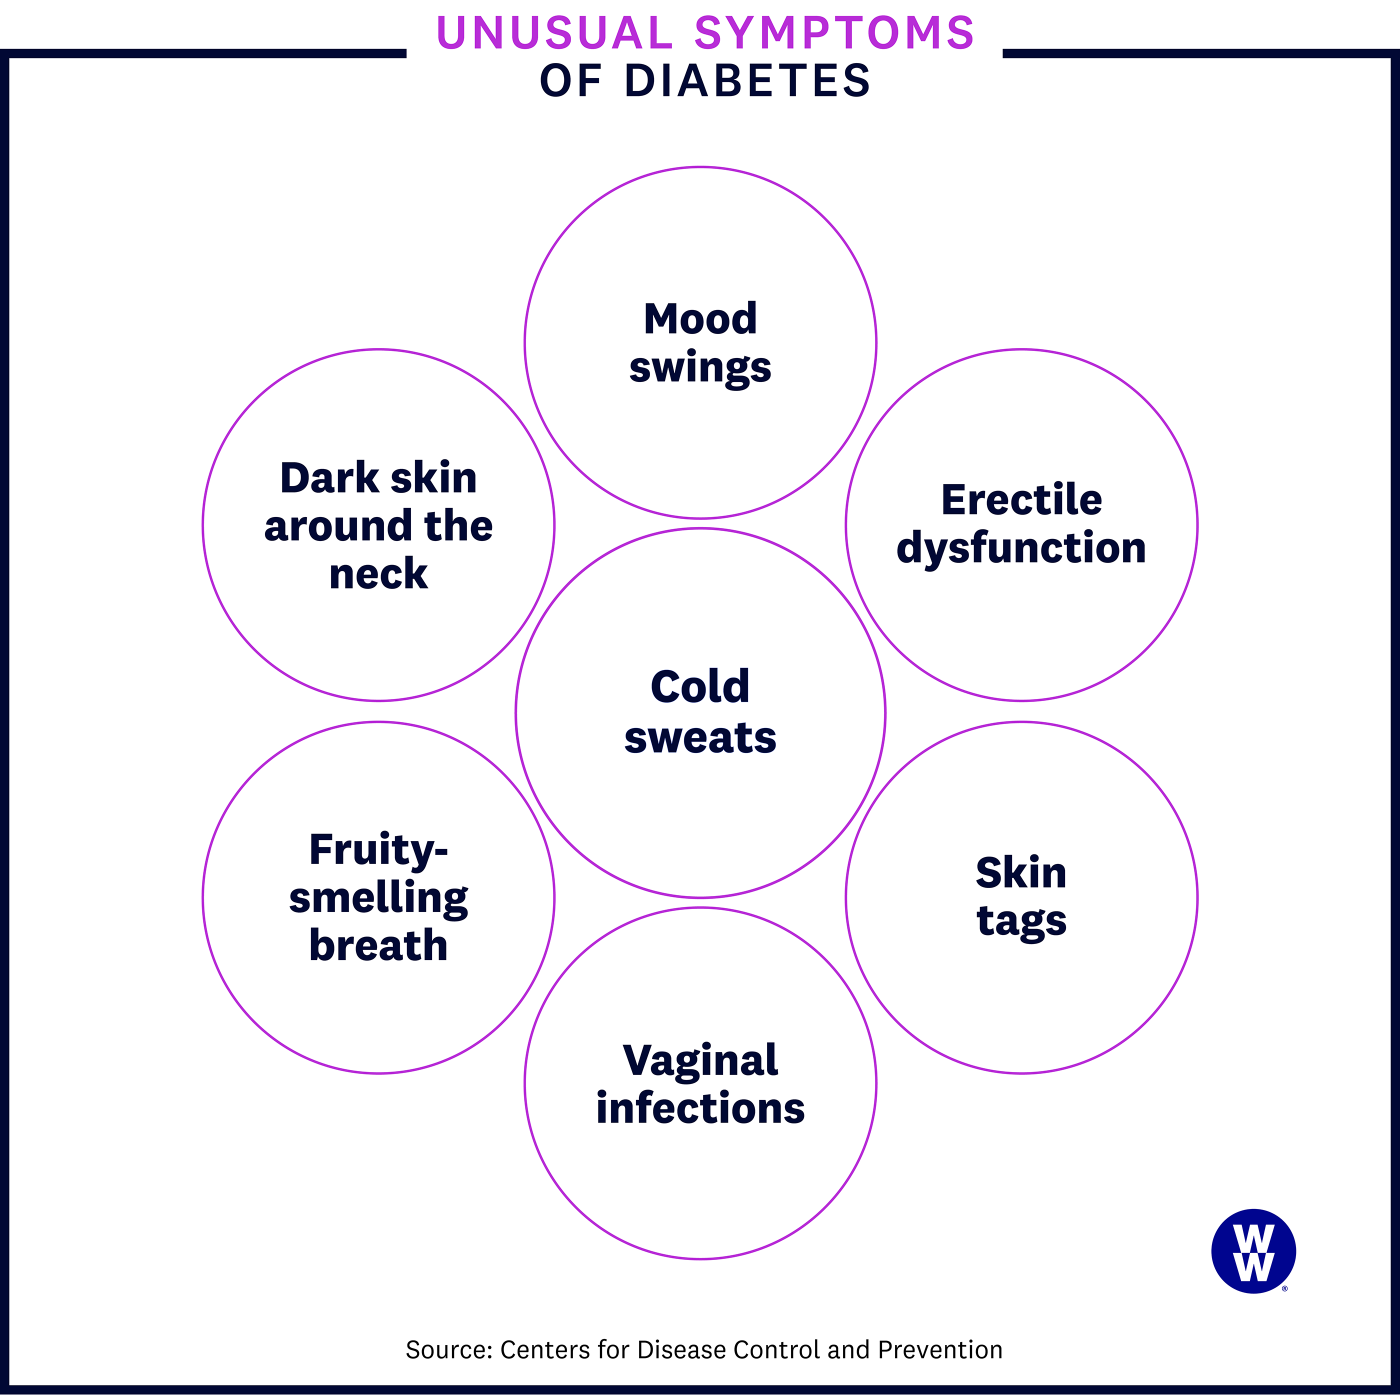 Unusual Symptoms of Diabetes